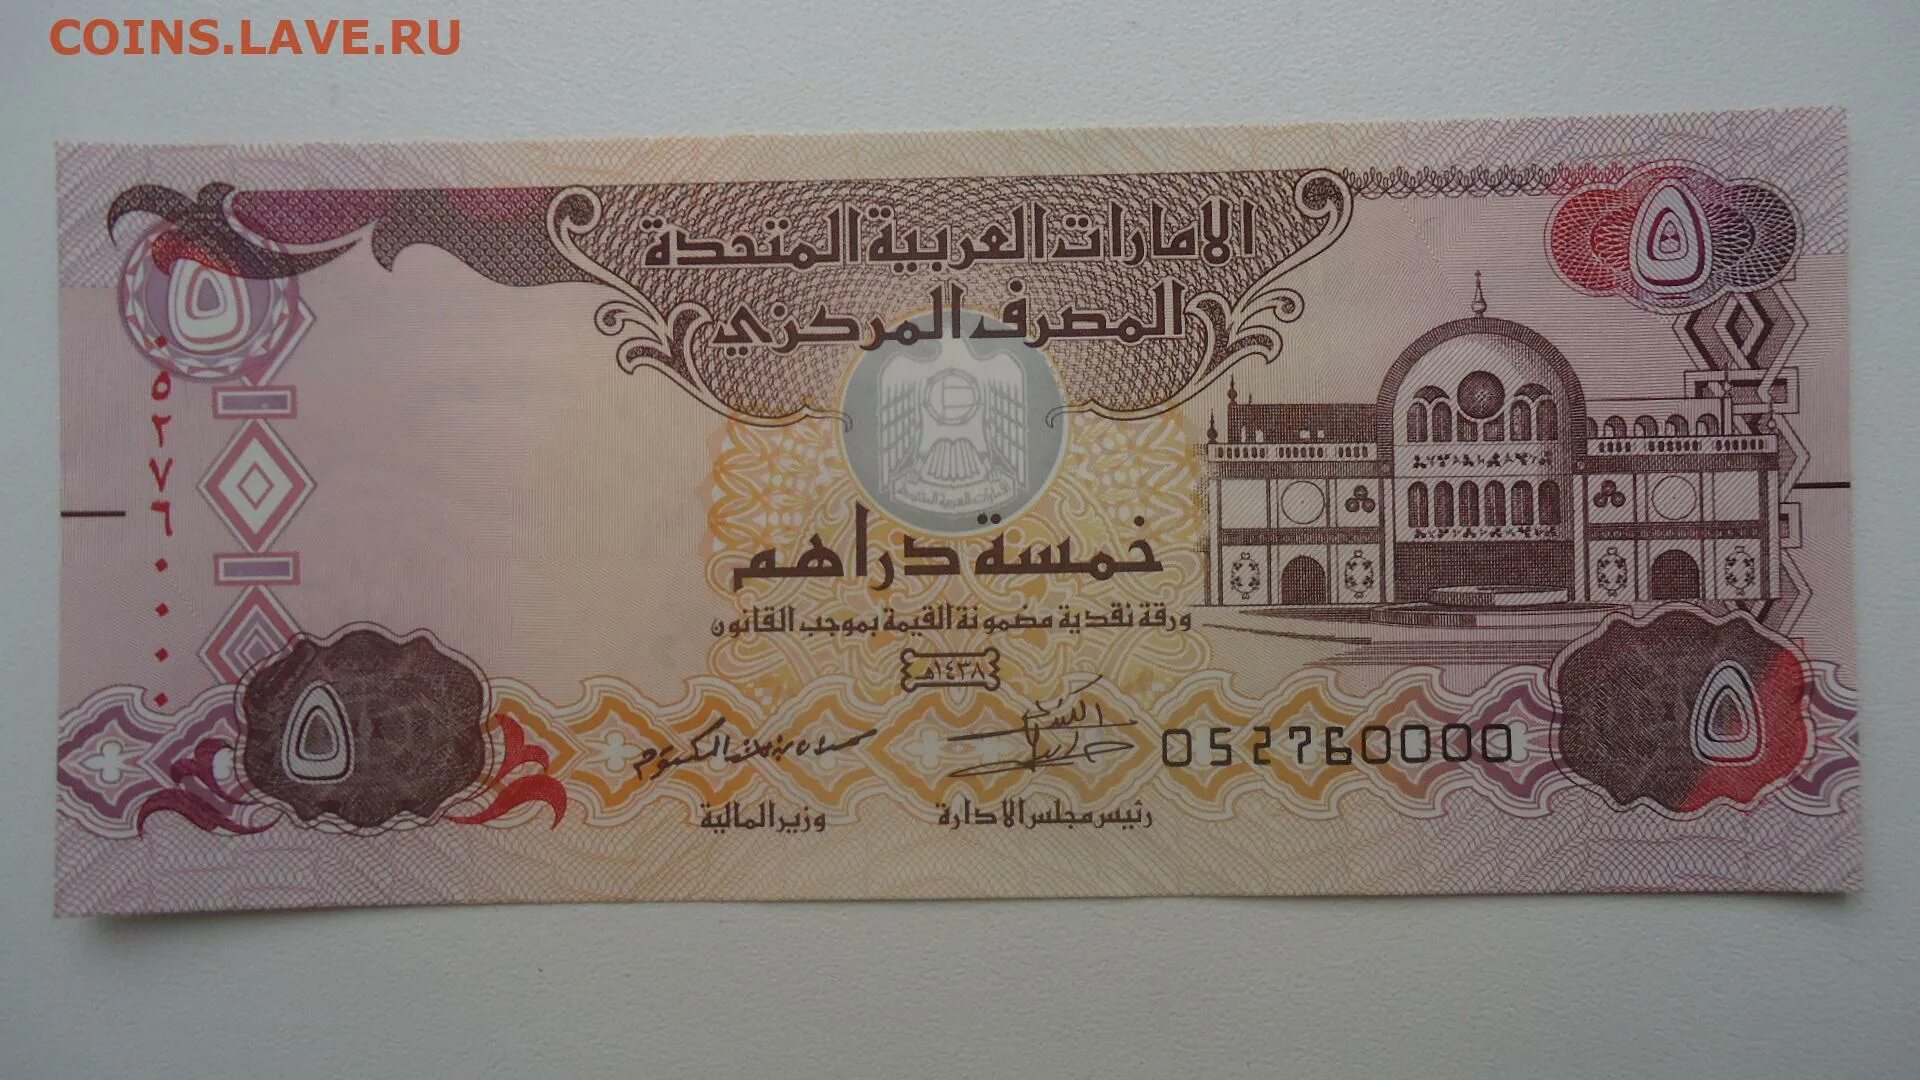 5 Дирхам ОАЭ. Банкнота ОАЭ 10 дирхам. 25 Дирхам Объединенные арабские эмираты. Дирхам ОАЭ К доллару США. 13000 дирхам